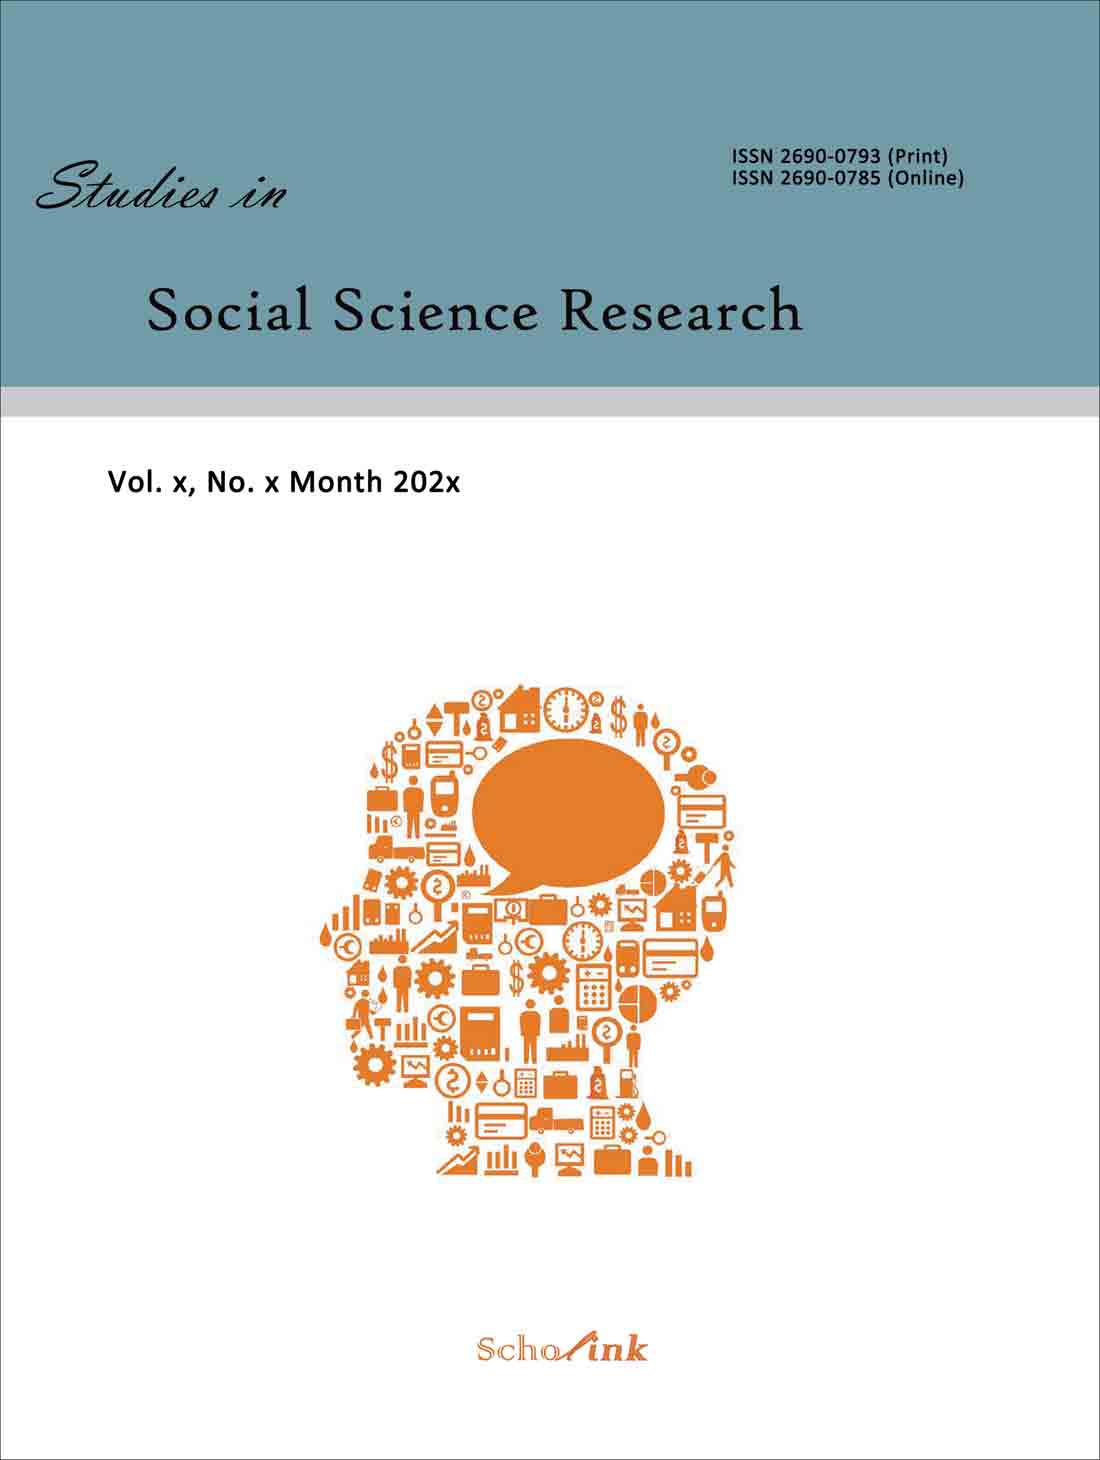 Studies in Social Science Research